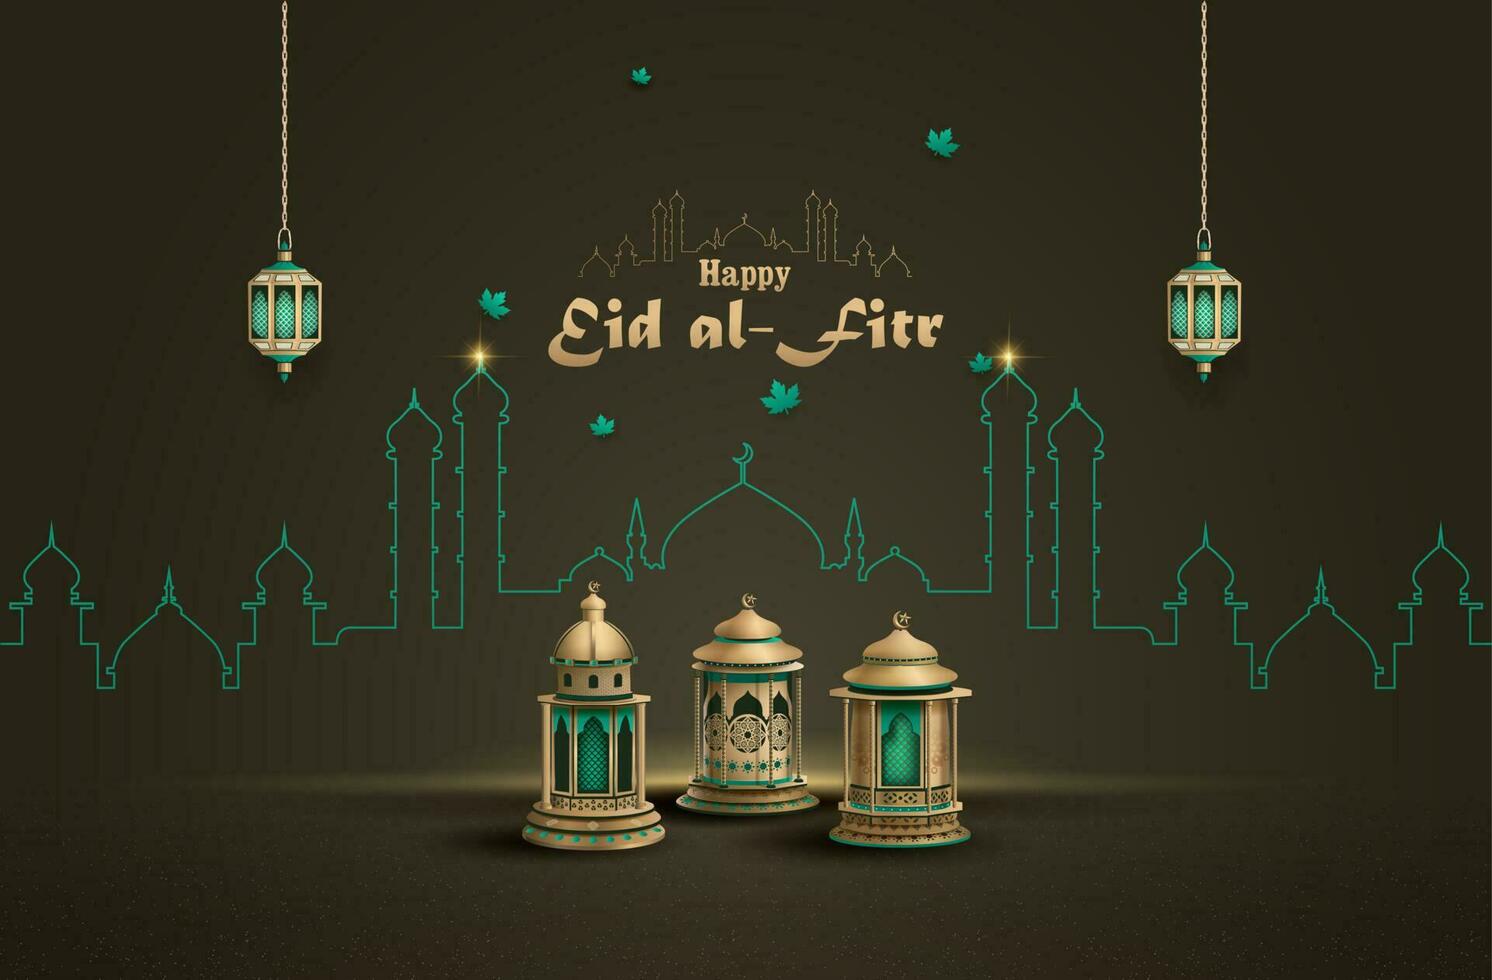 Islamic greetings eid al fitr card design with three lanterns vector